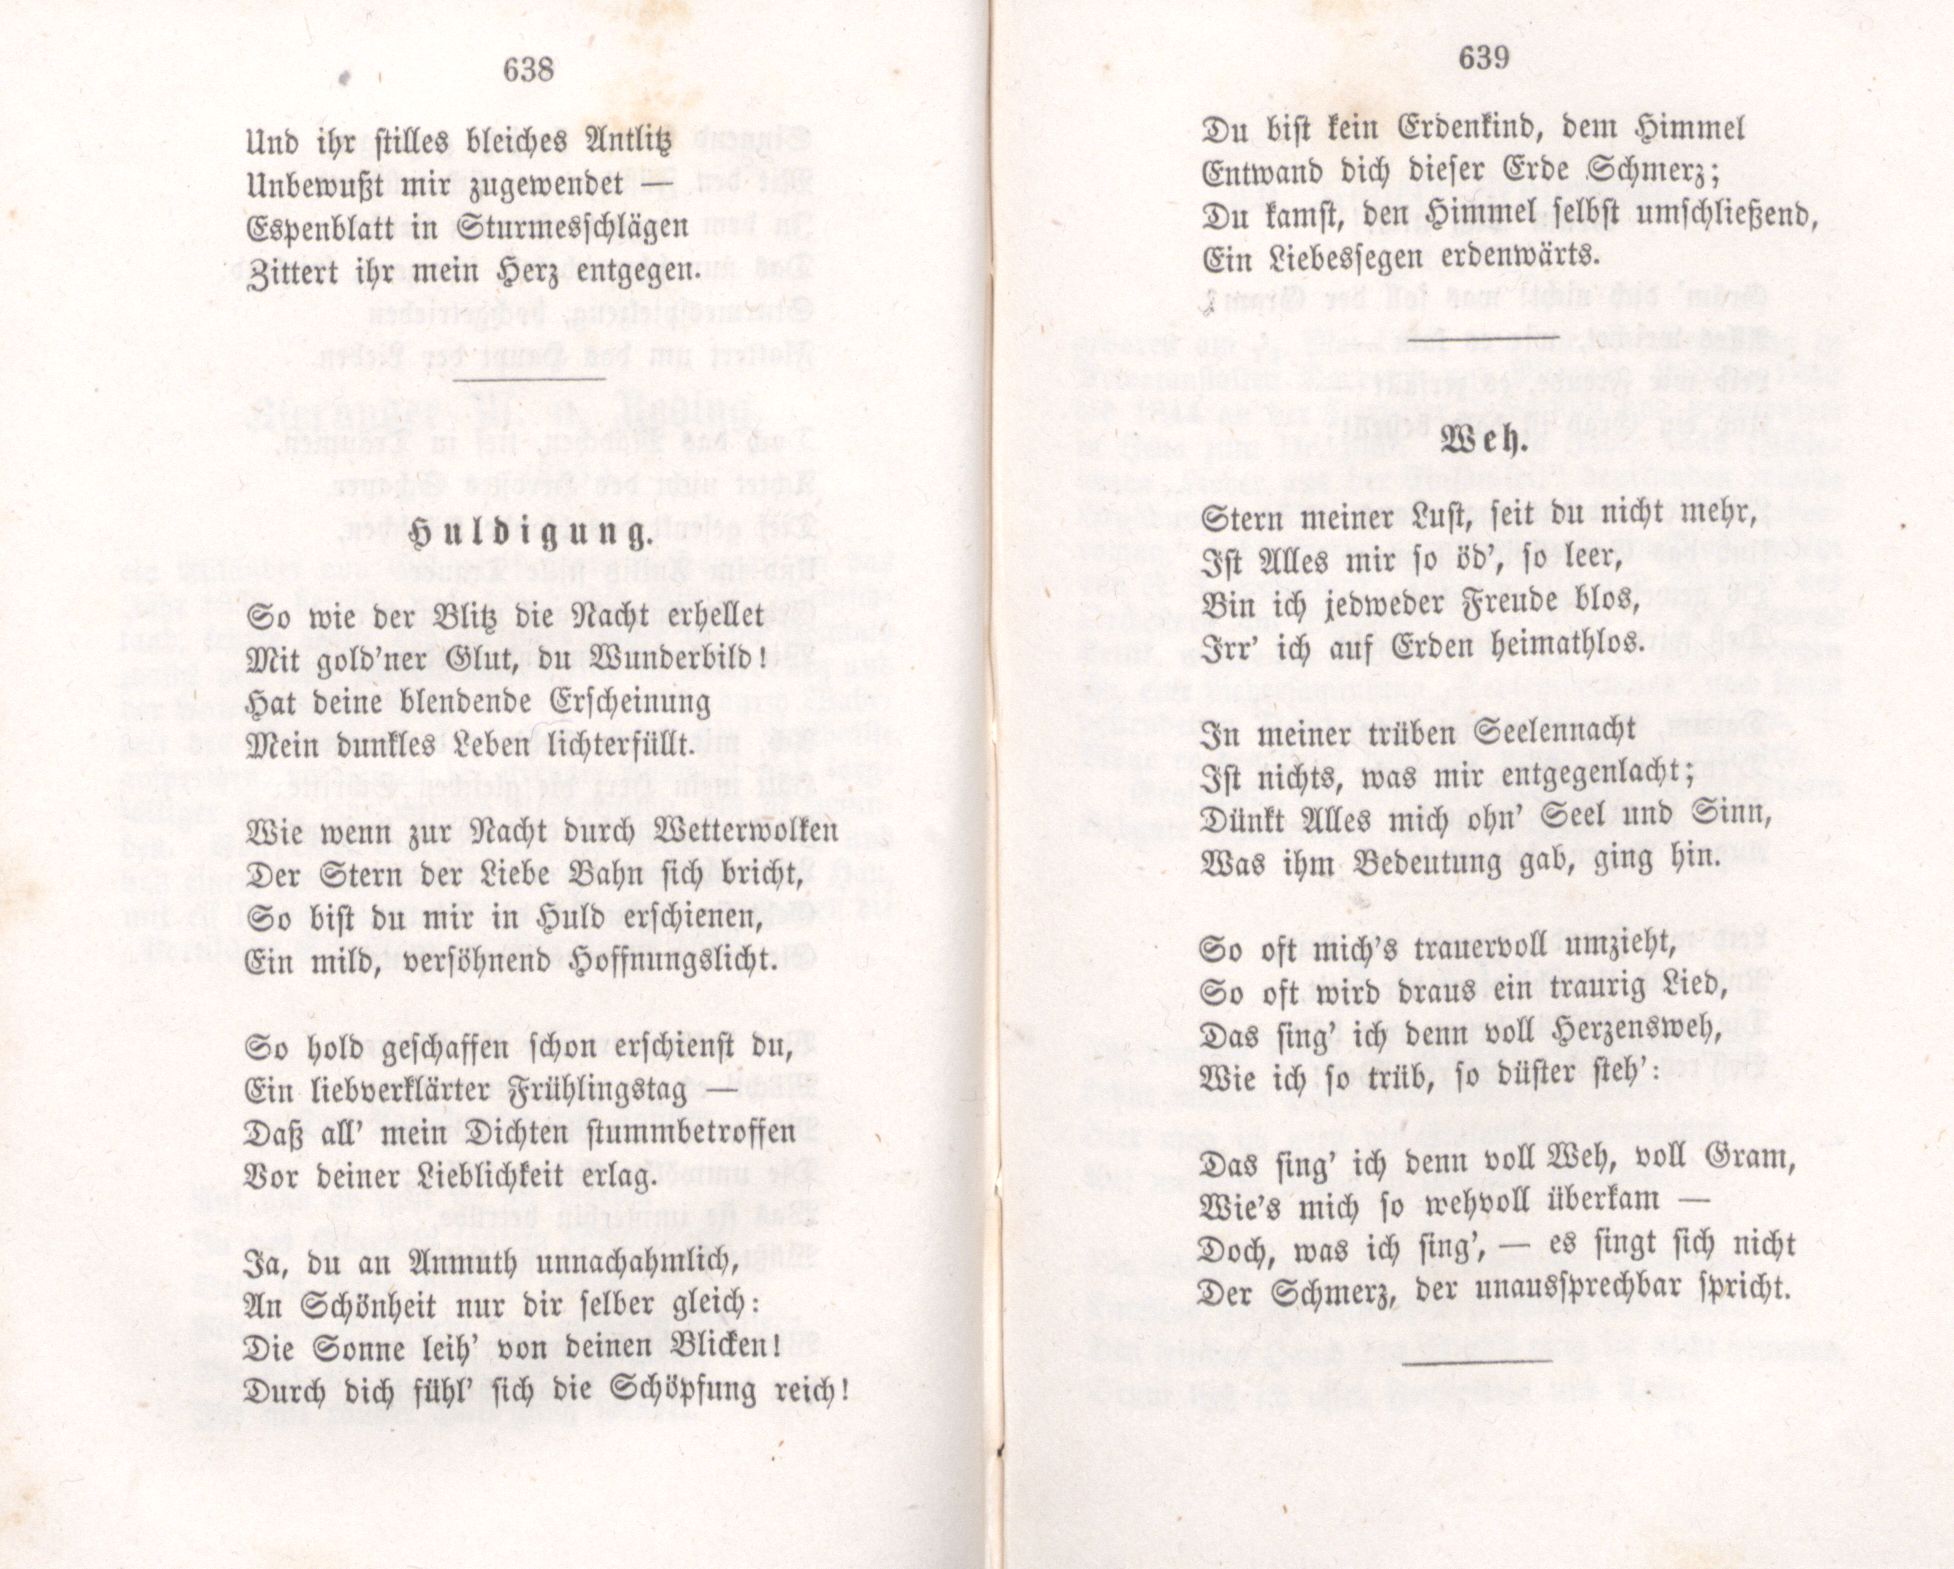 Huldigung (1855) | 1. (638-639) Main body of text